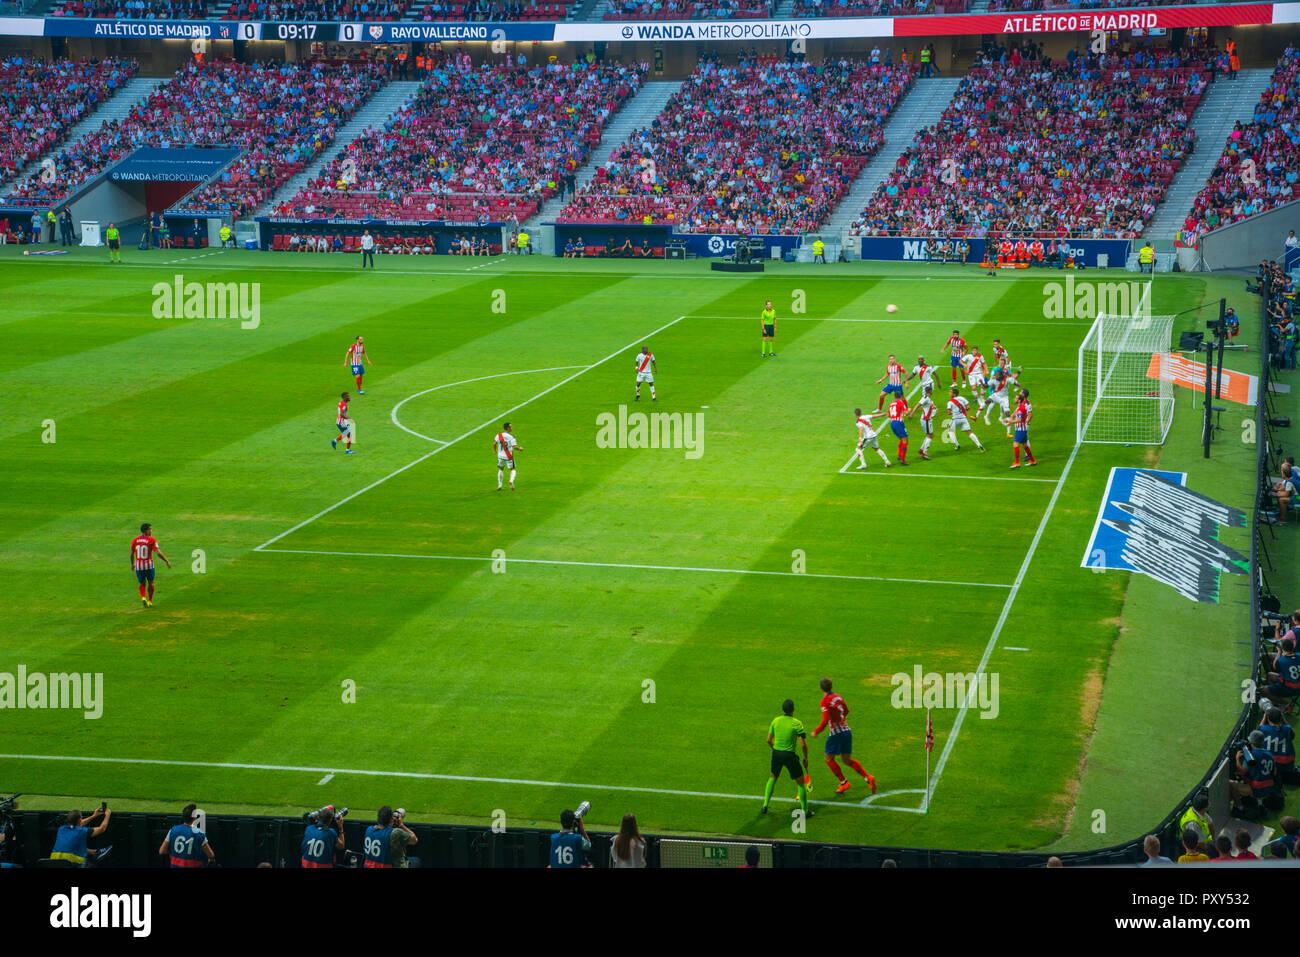 Atletico de Madrid versus Rayo Vallecano football match. Wanda Metropolitano stadium, Madrid, Spain. Stock Photo